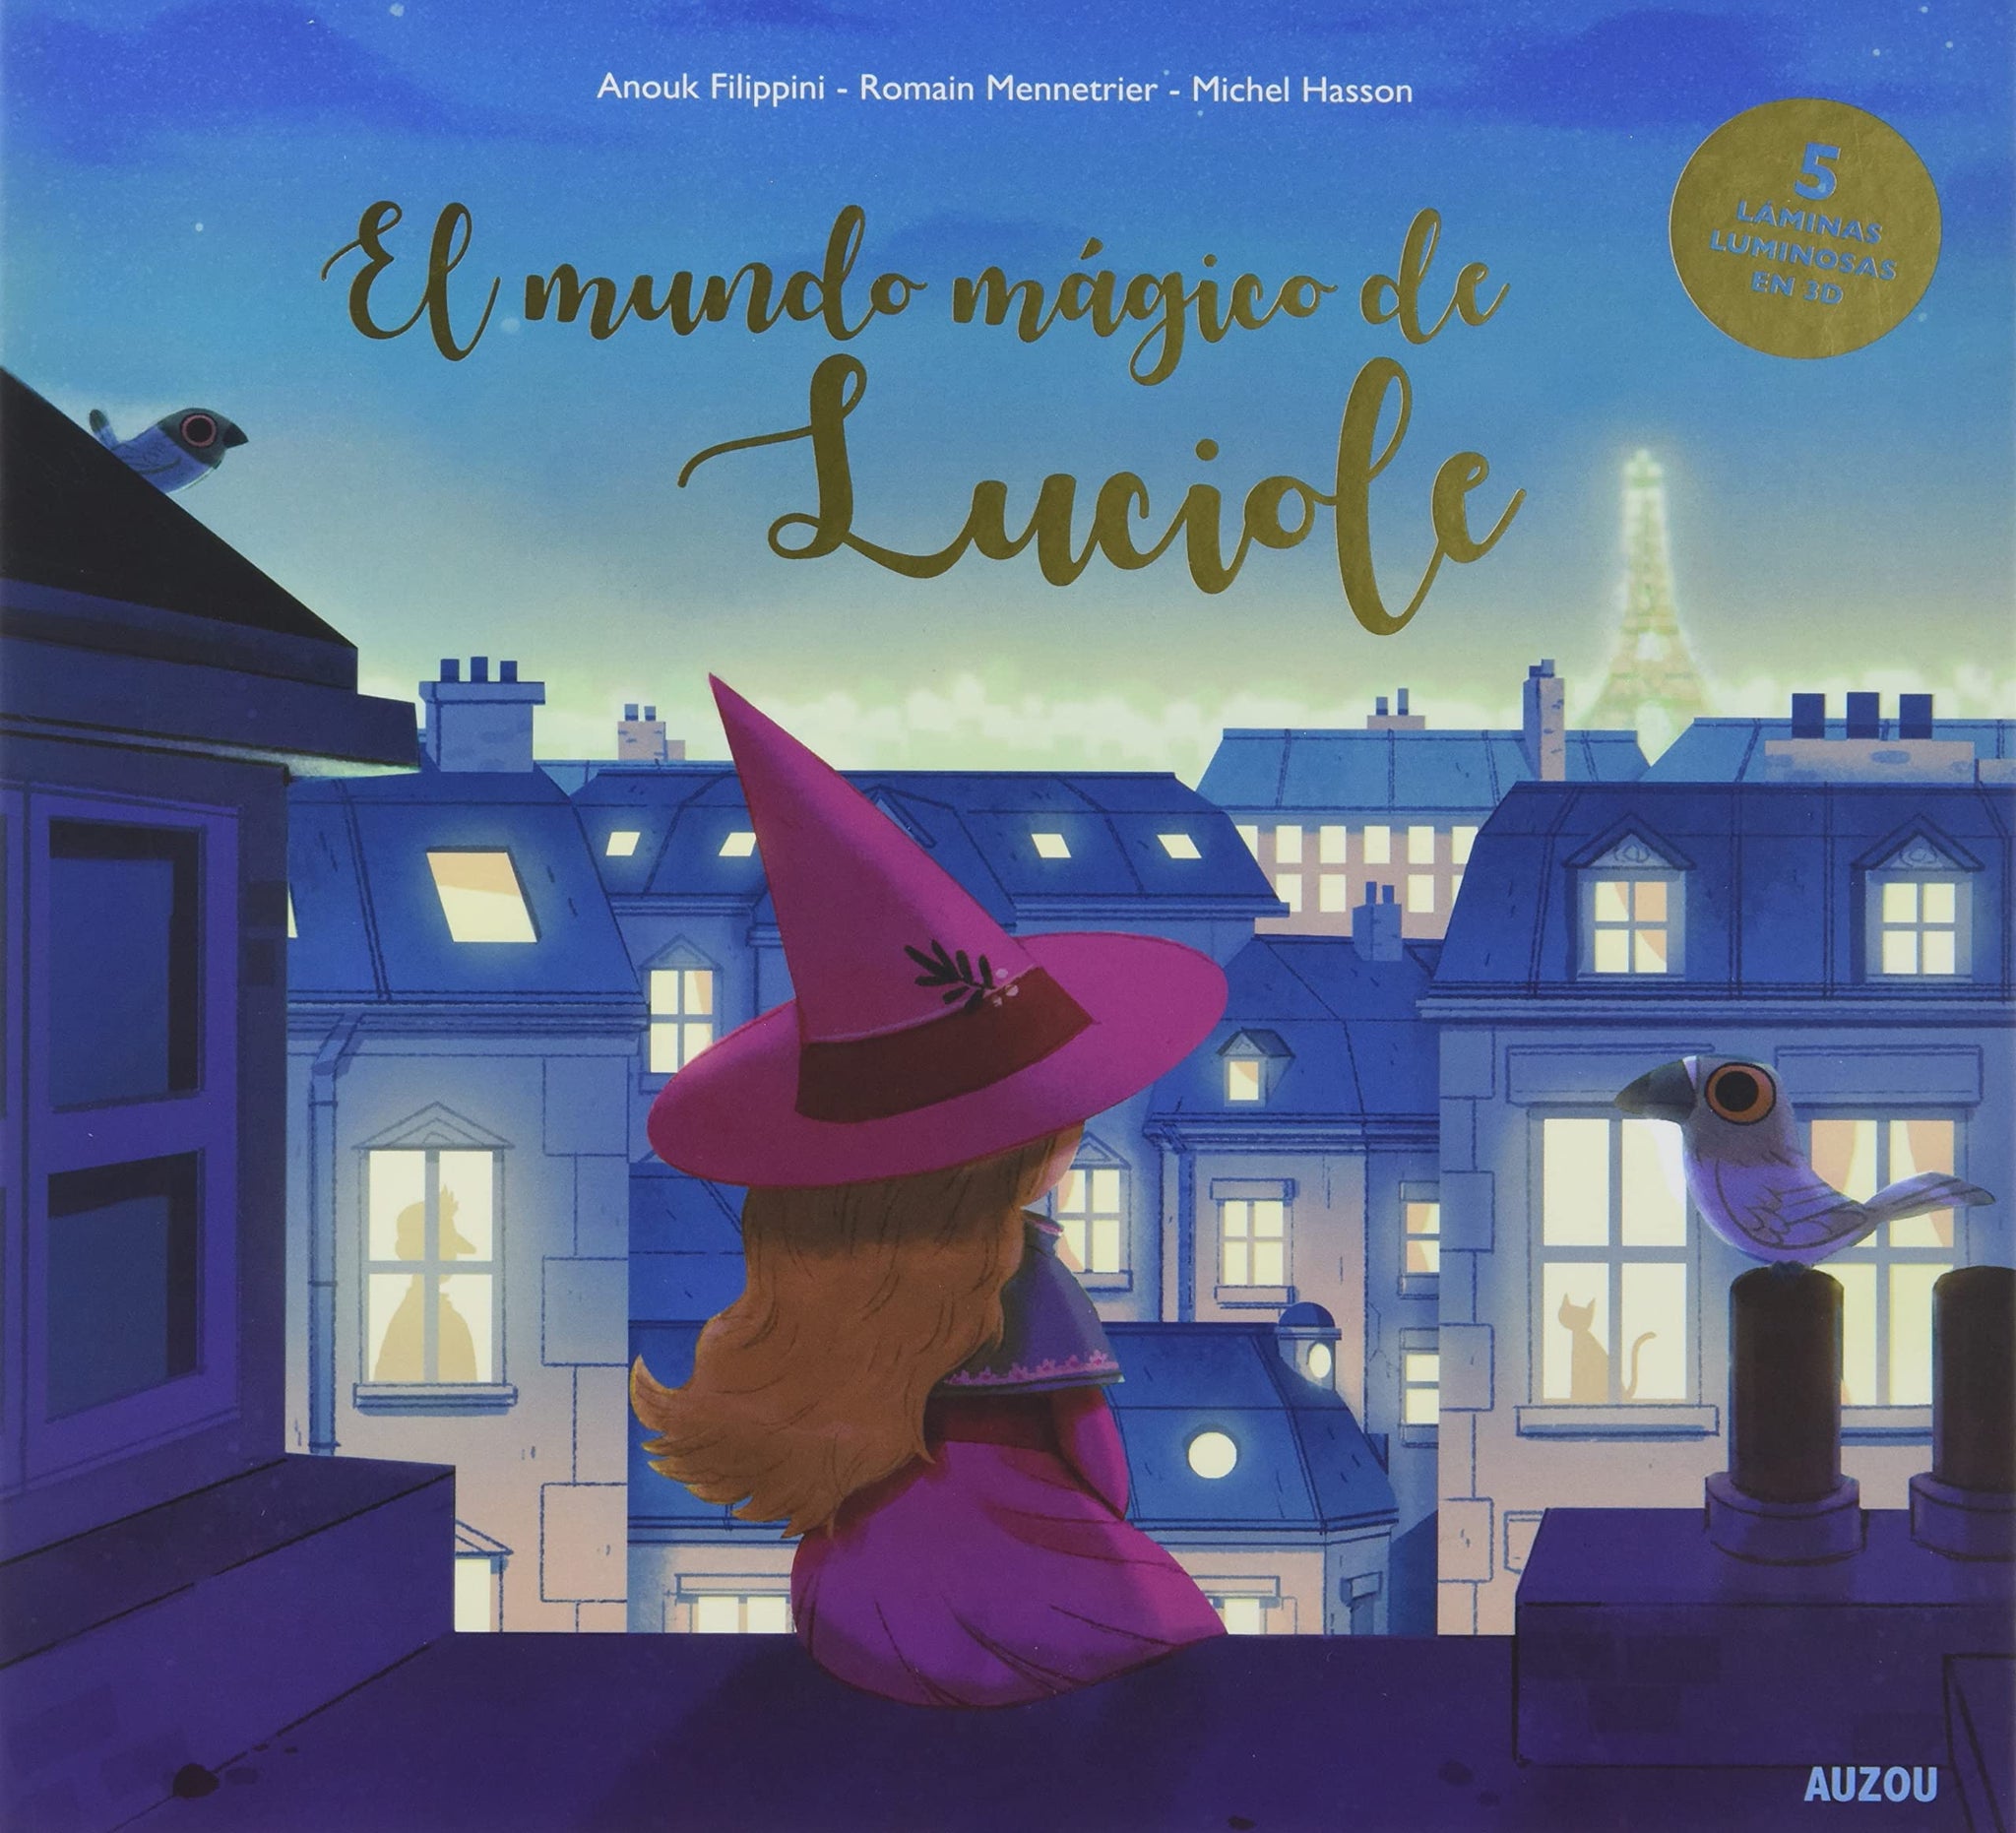 El mundo mágico de Luciole Autor: Anouk Filippini (Autor), Michel Hasson (Ilustrador), Romain Mennetrier